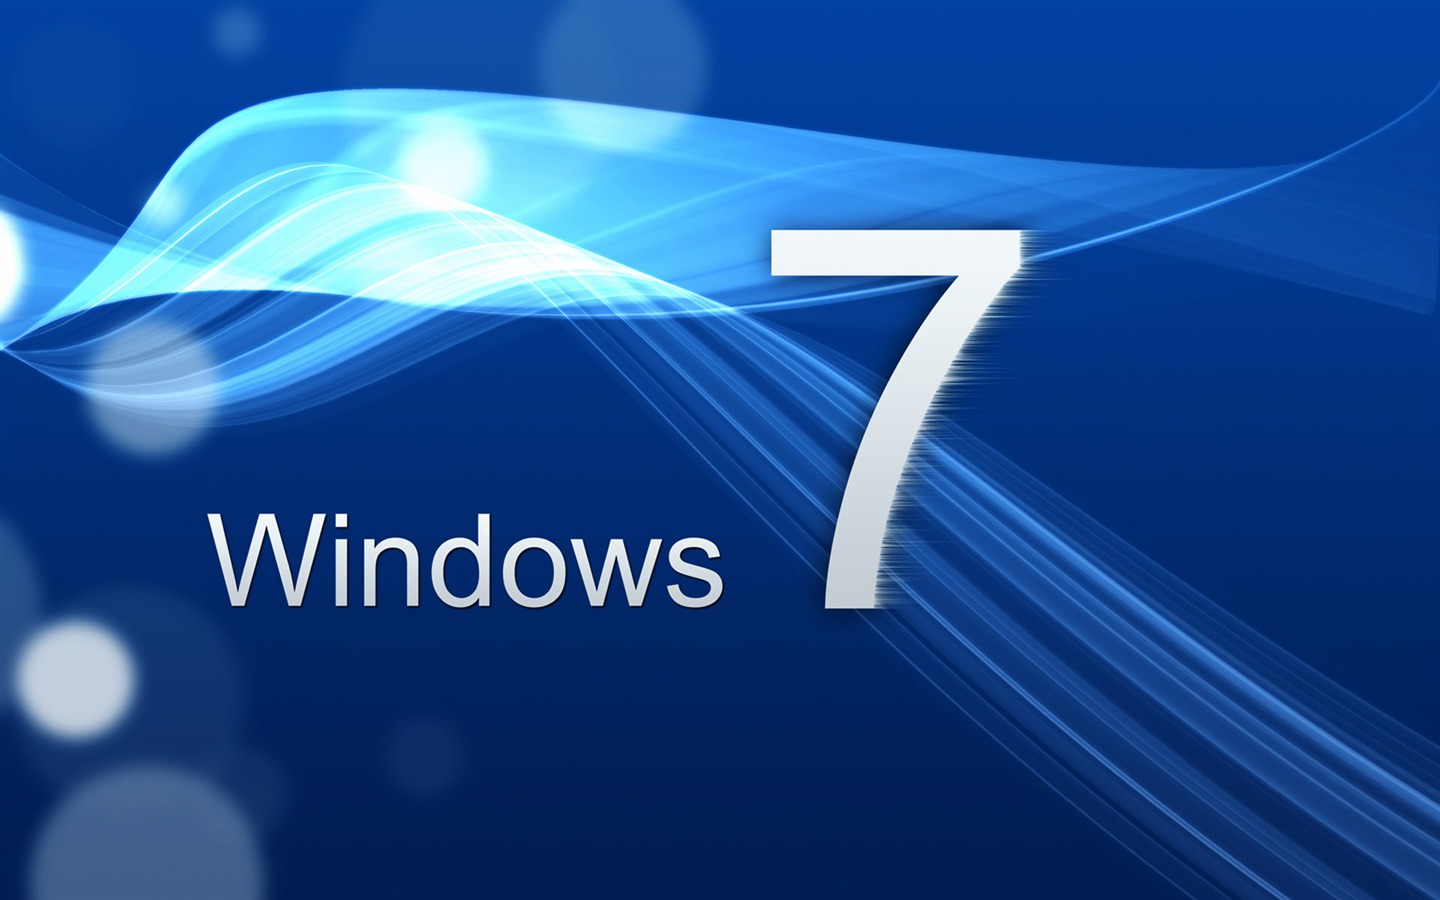  Windows7のテーマの壁紙(2) #1 - 1440x900